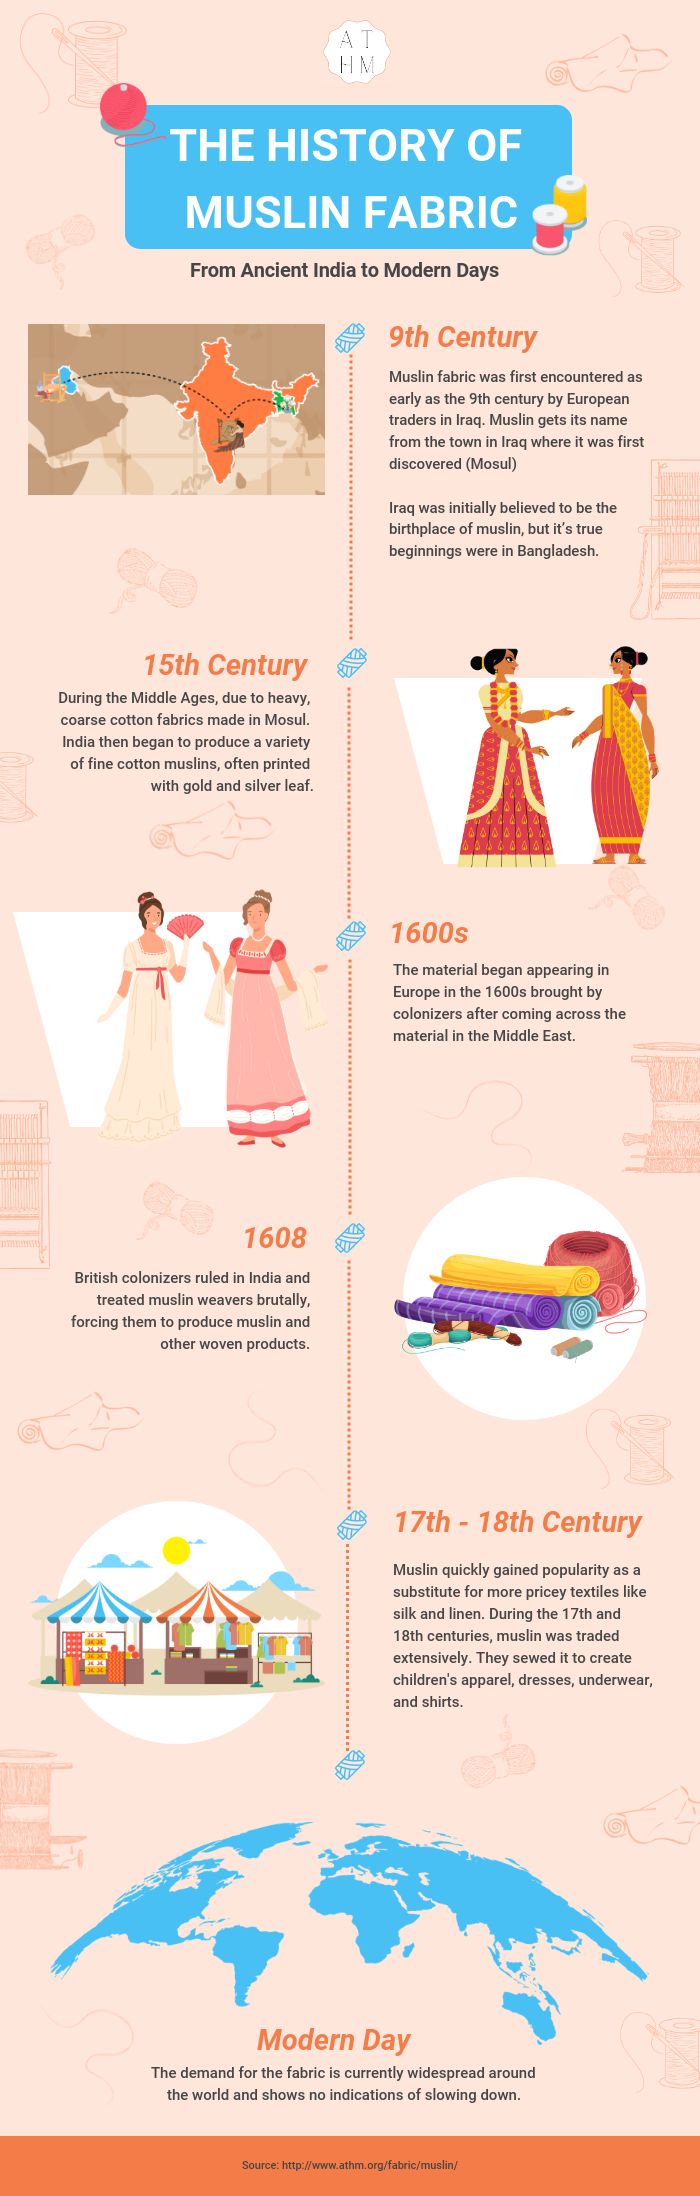 History of Muslin Fabric